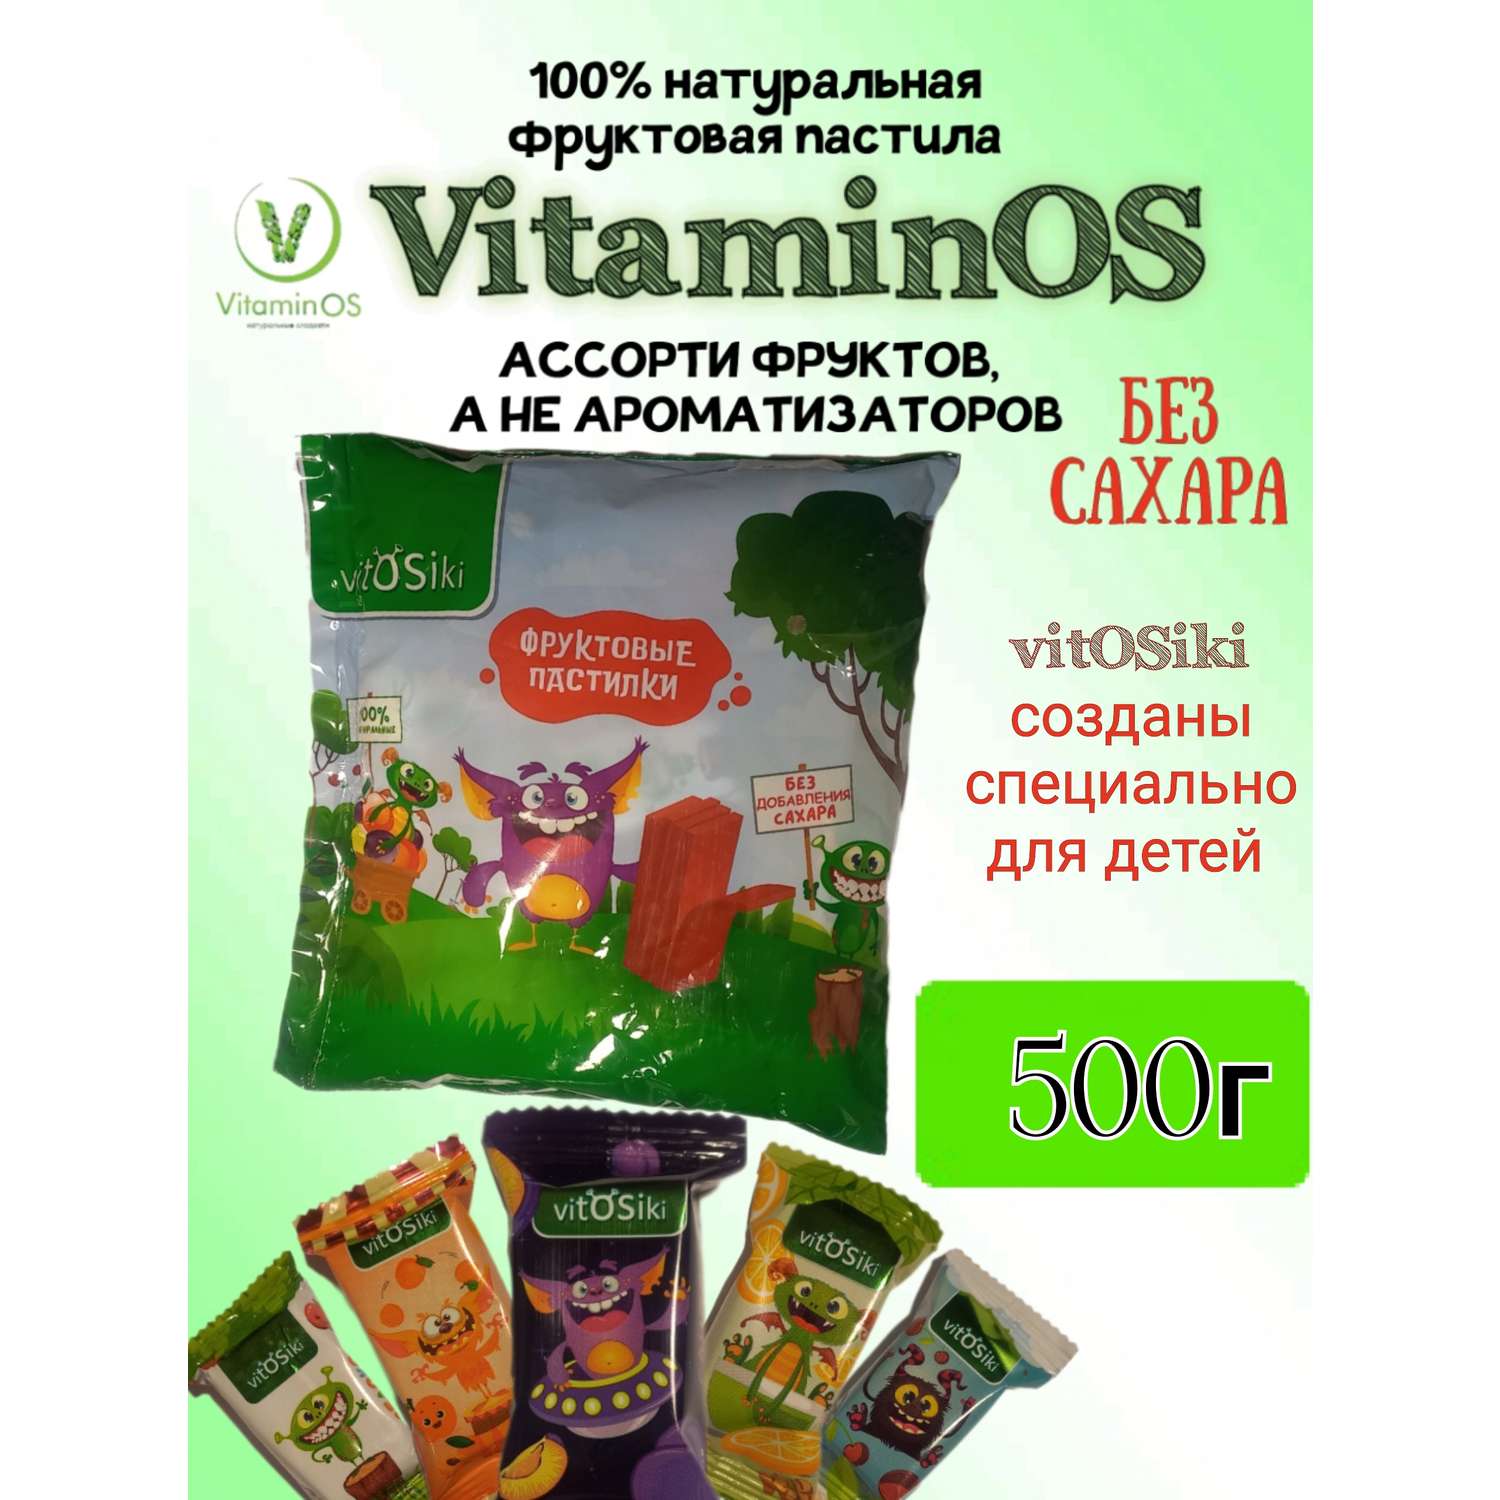 Пастила VitaminOS витосики - фото 1